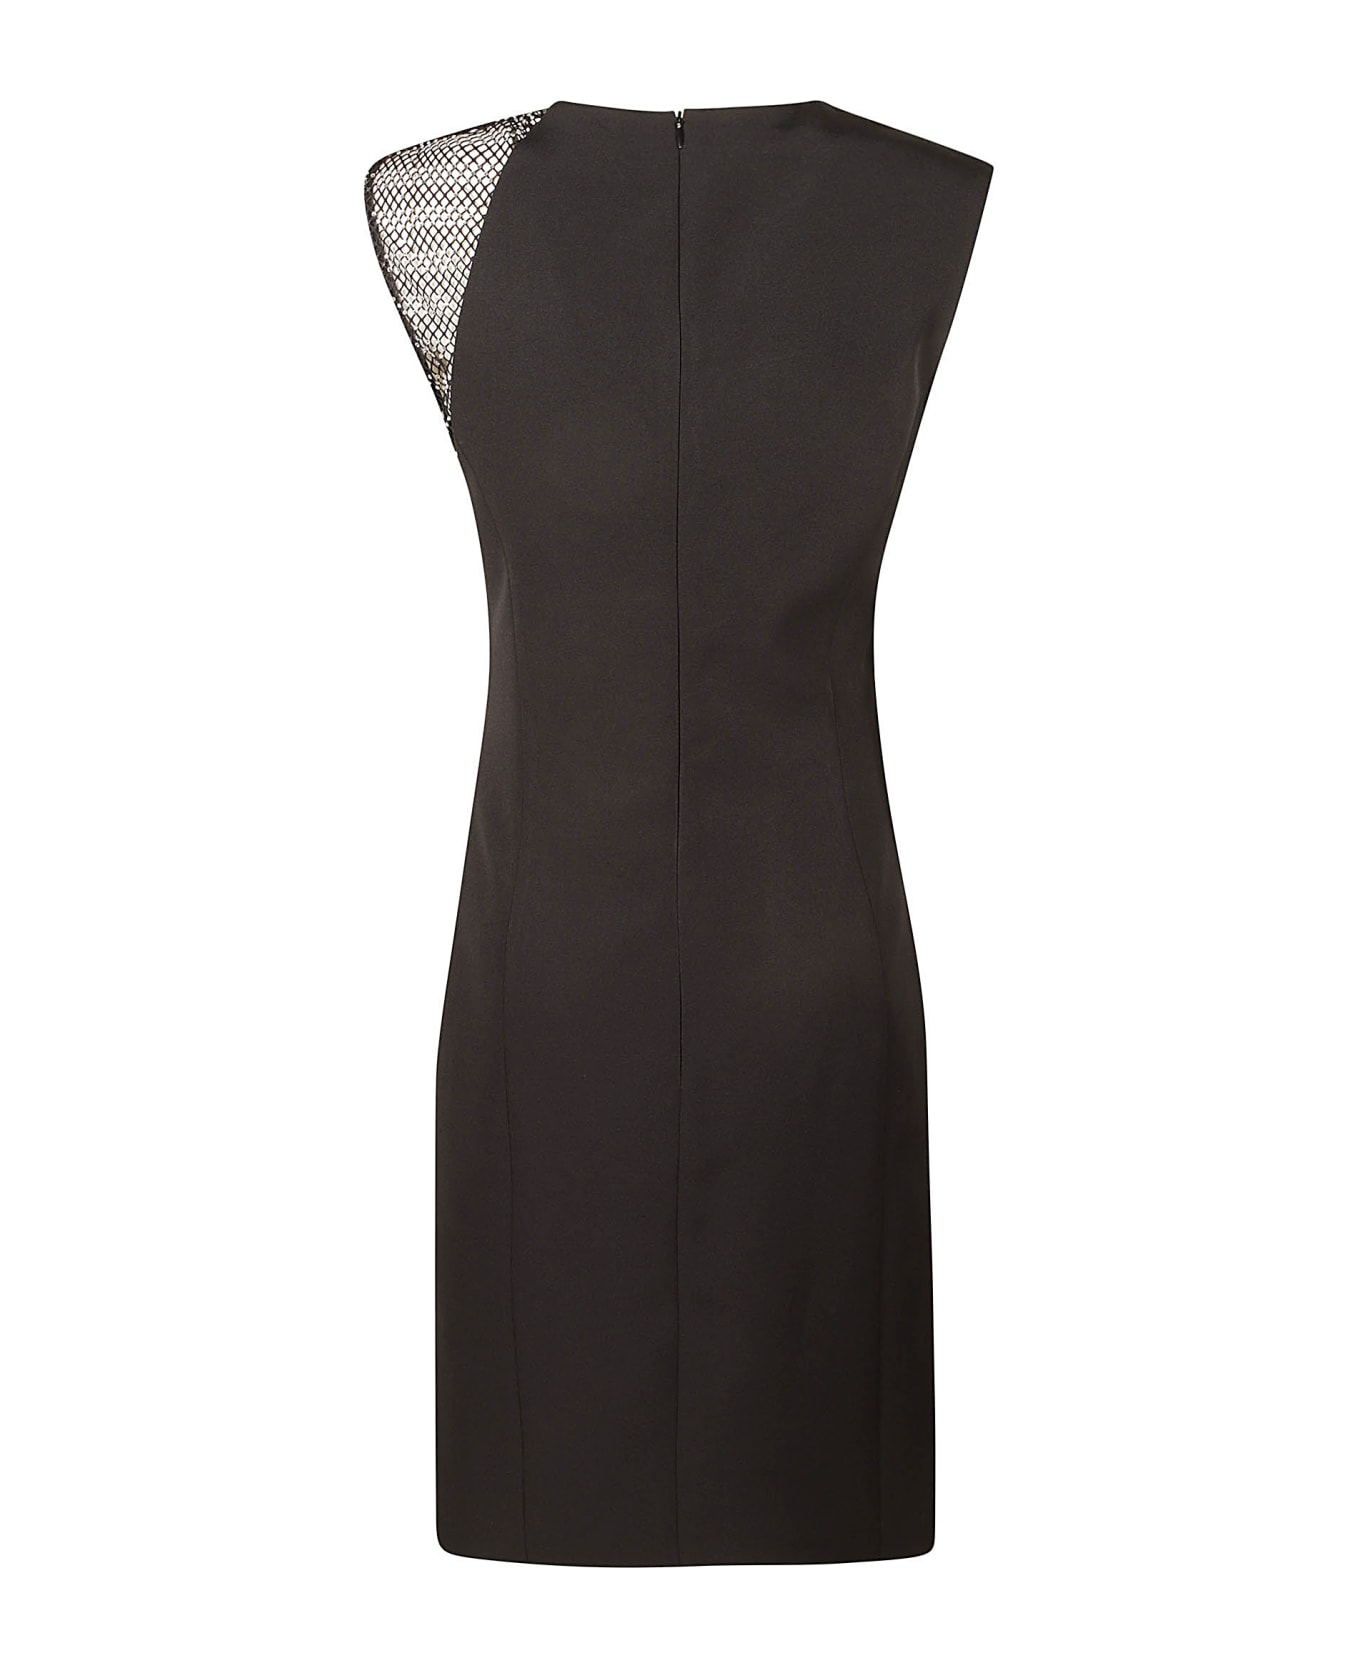 Genny Rear Zip Lace Paneled Sleeveless Dress - Black